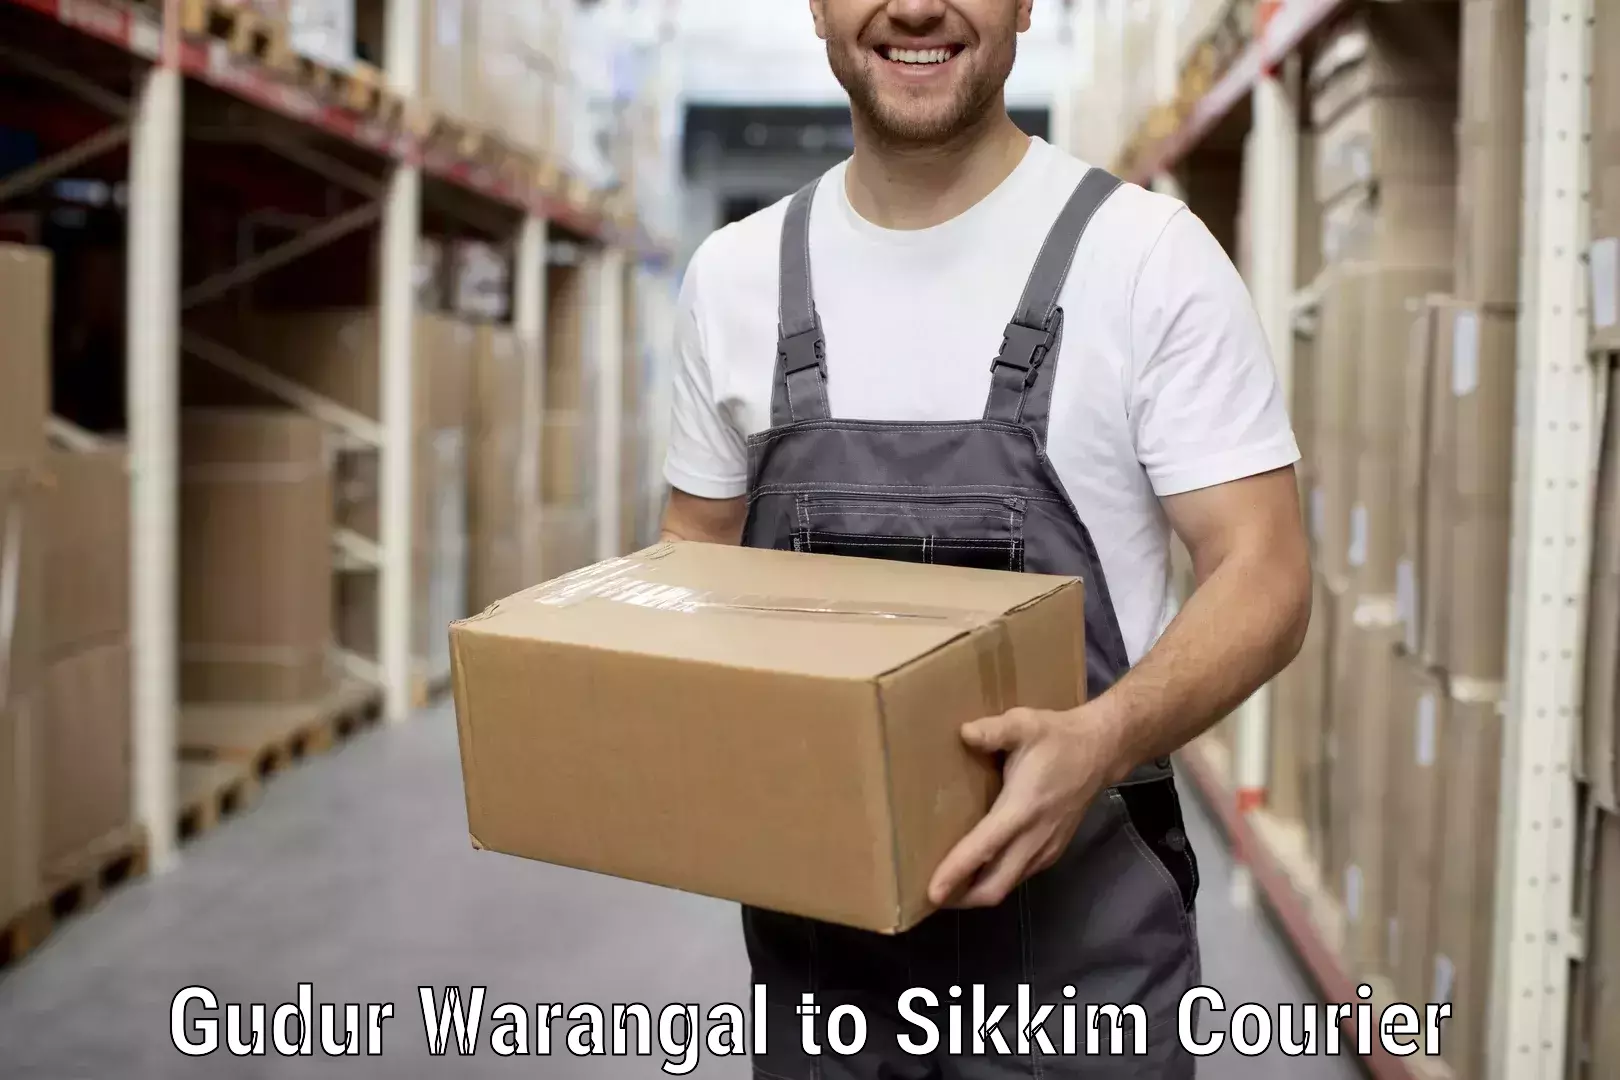 Efficient moving company Gudur Warangal to Pelling